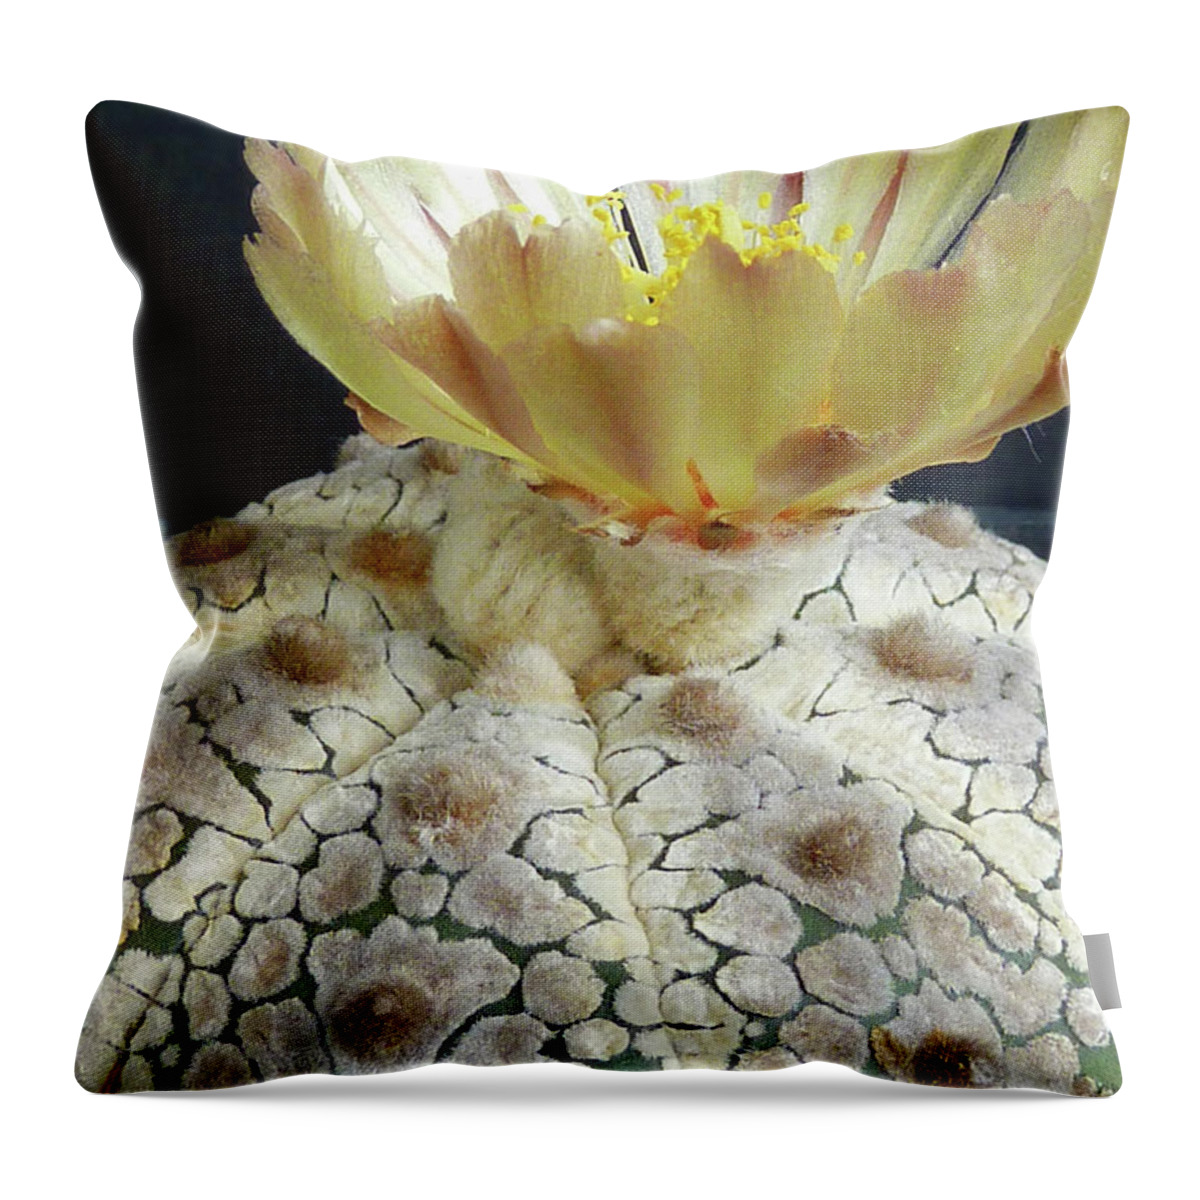 Cactus Throw Pillow featuring the photograph Cactus Flower 1 by Selena Boron